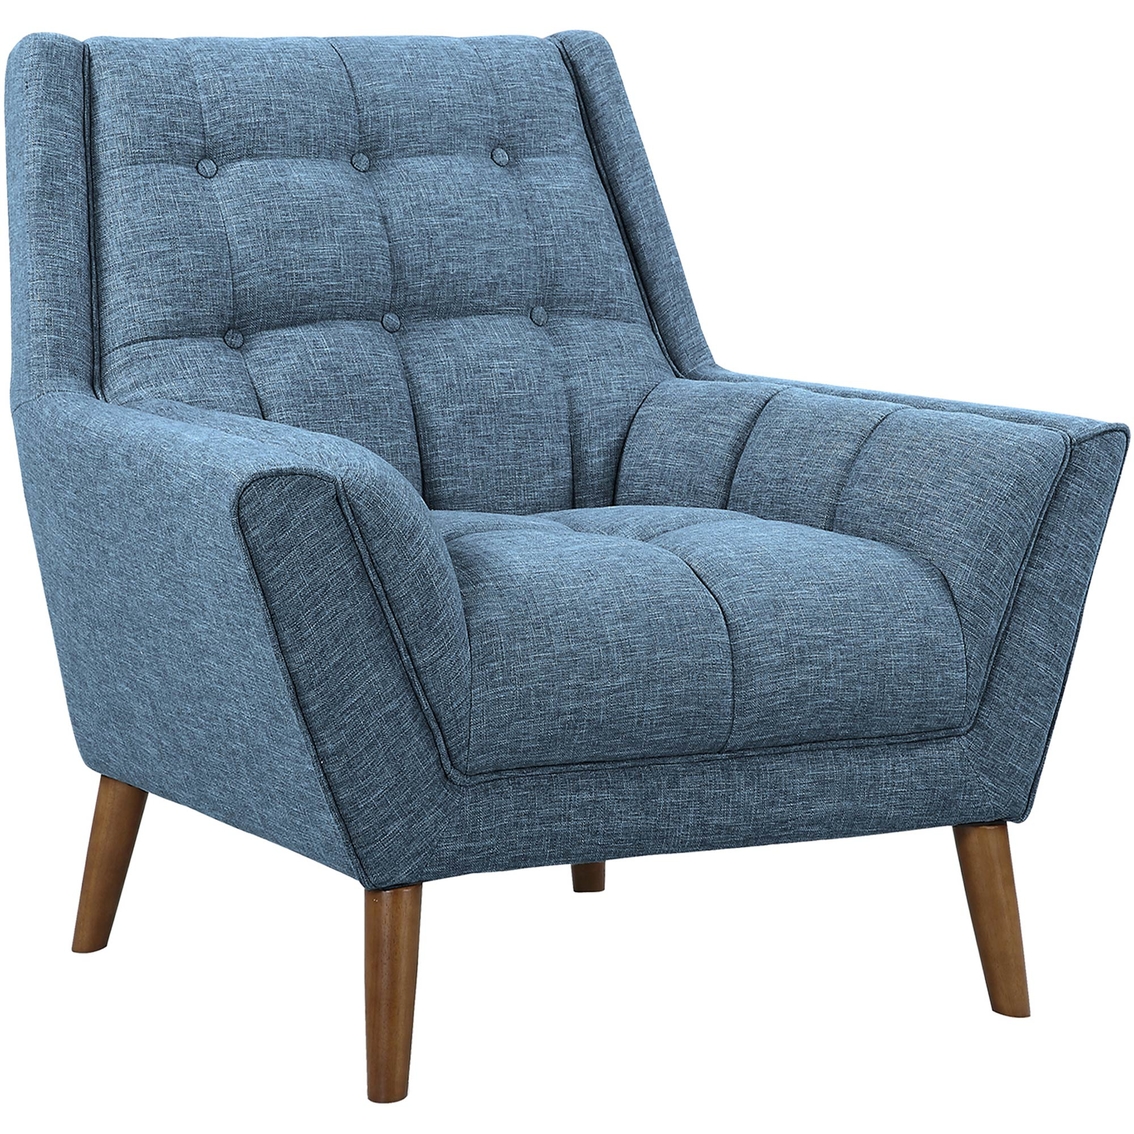 Armen Living Cobra Chair | Chairs & Recliners | Furniture & Appliances ...